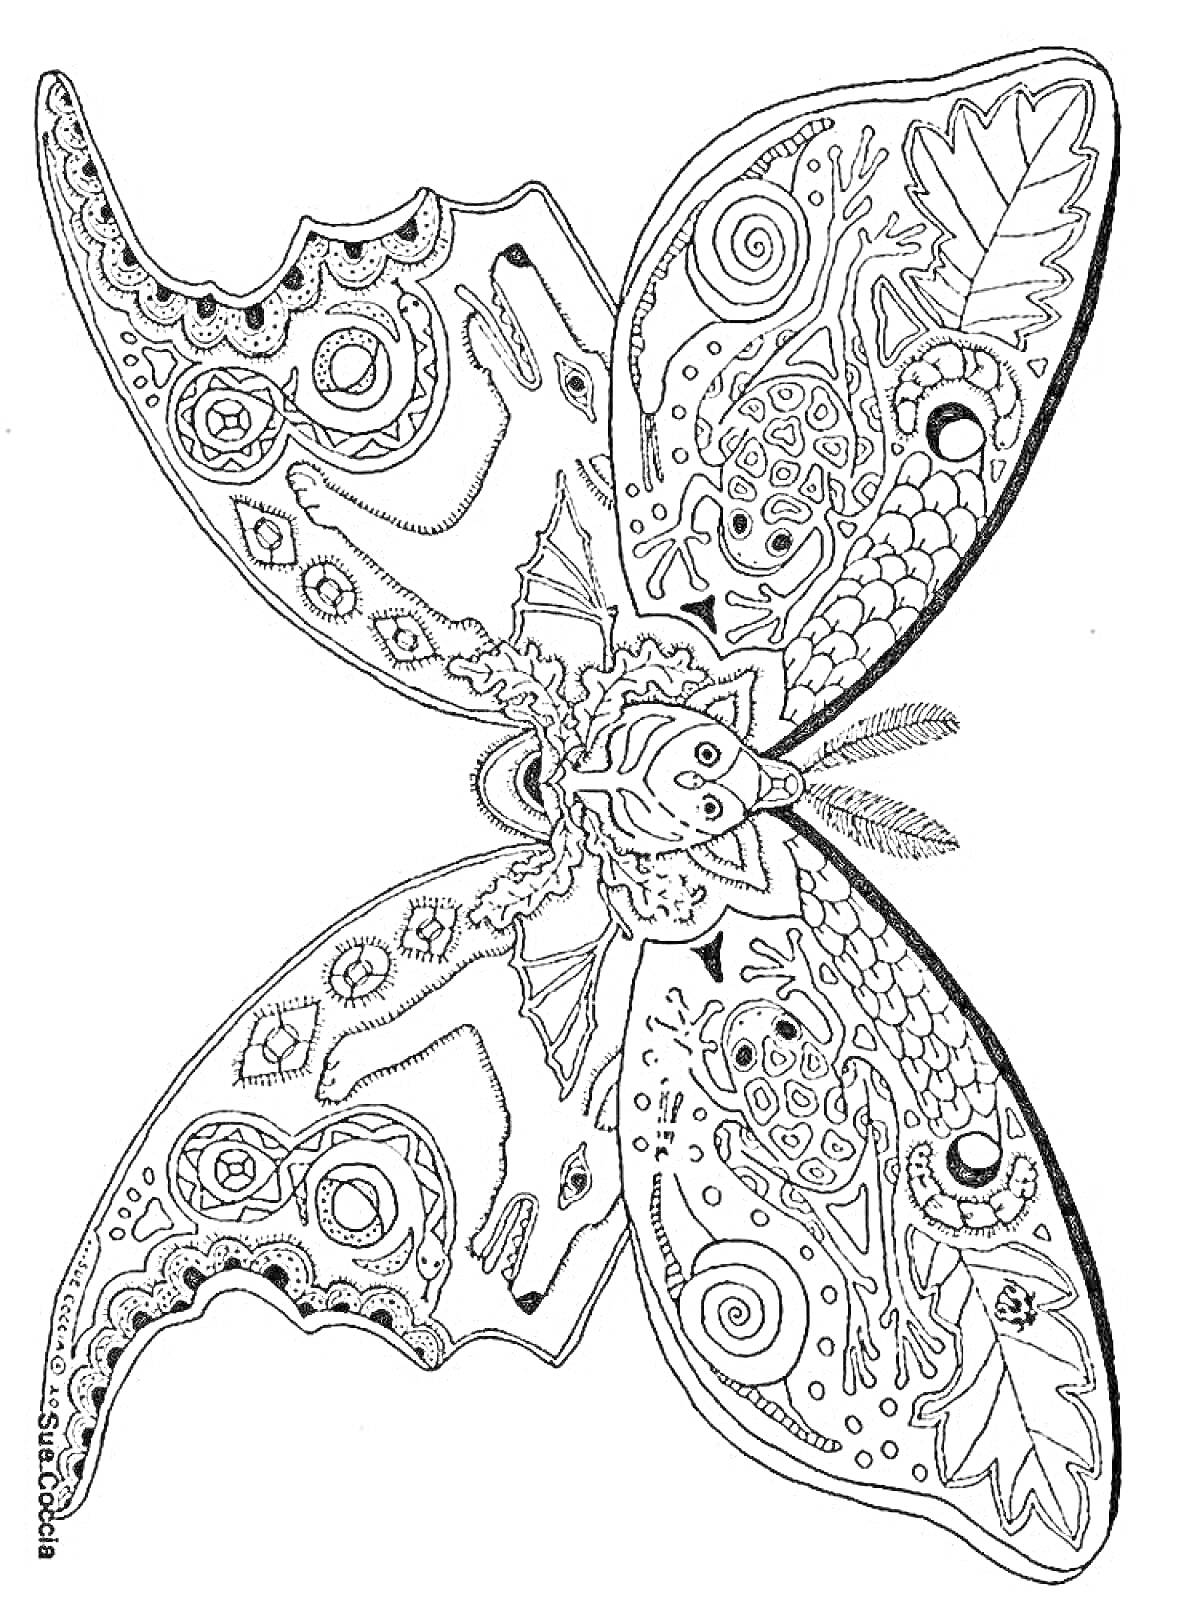 Раскраска Бабочка с узорами и геометрическими элементами